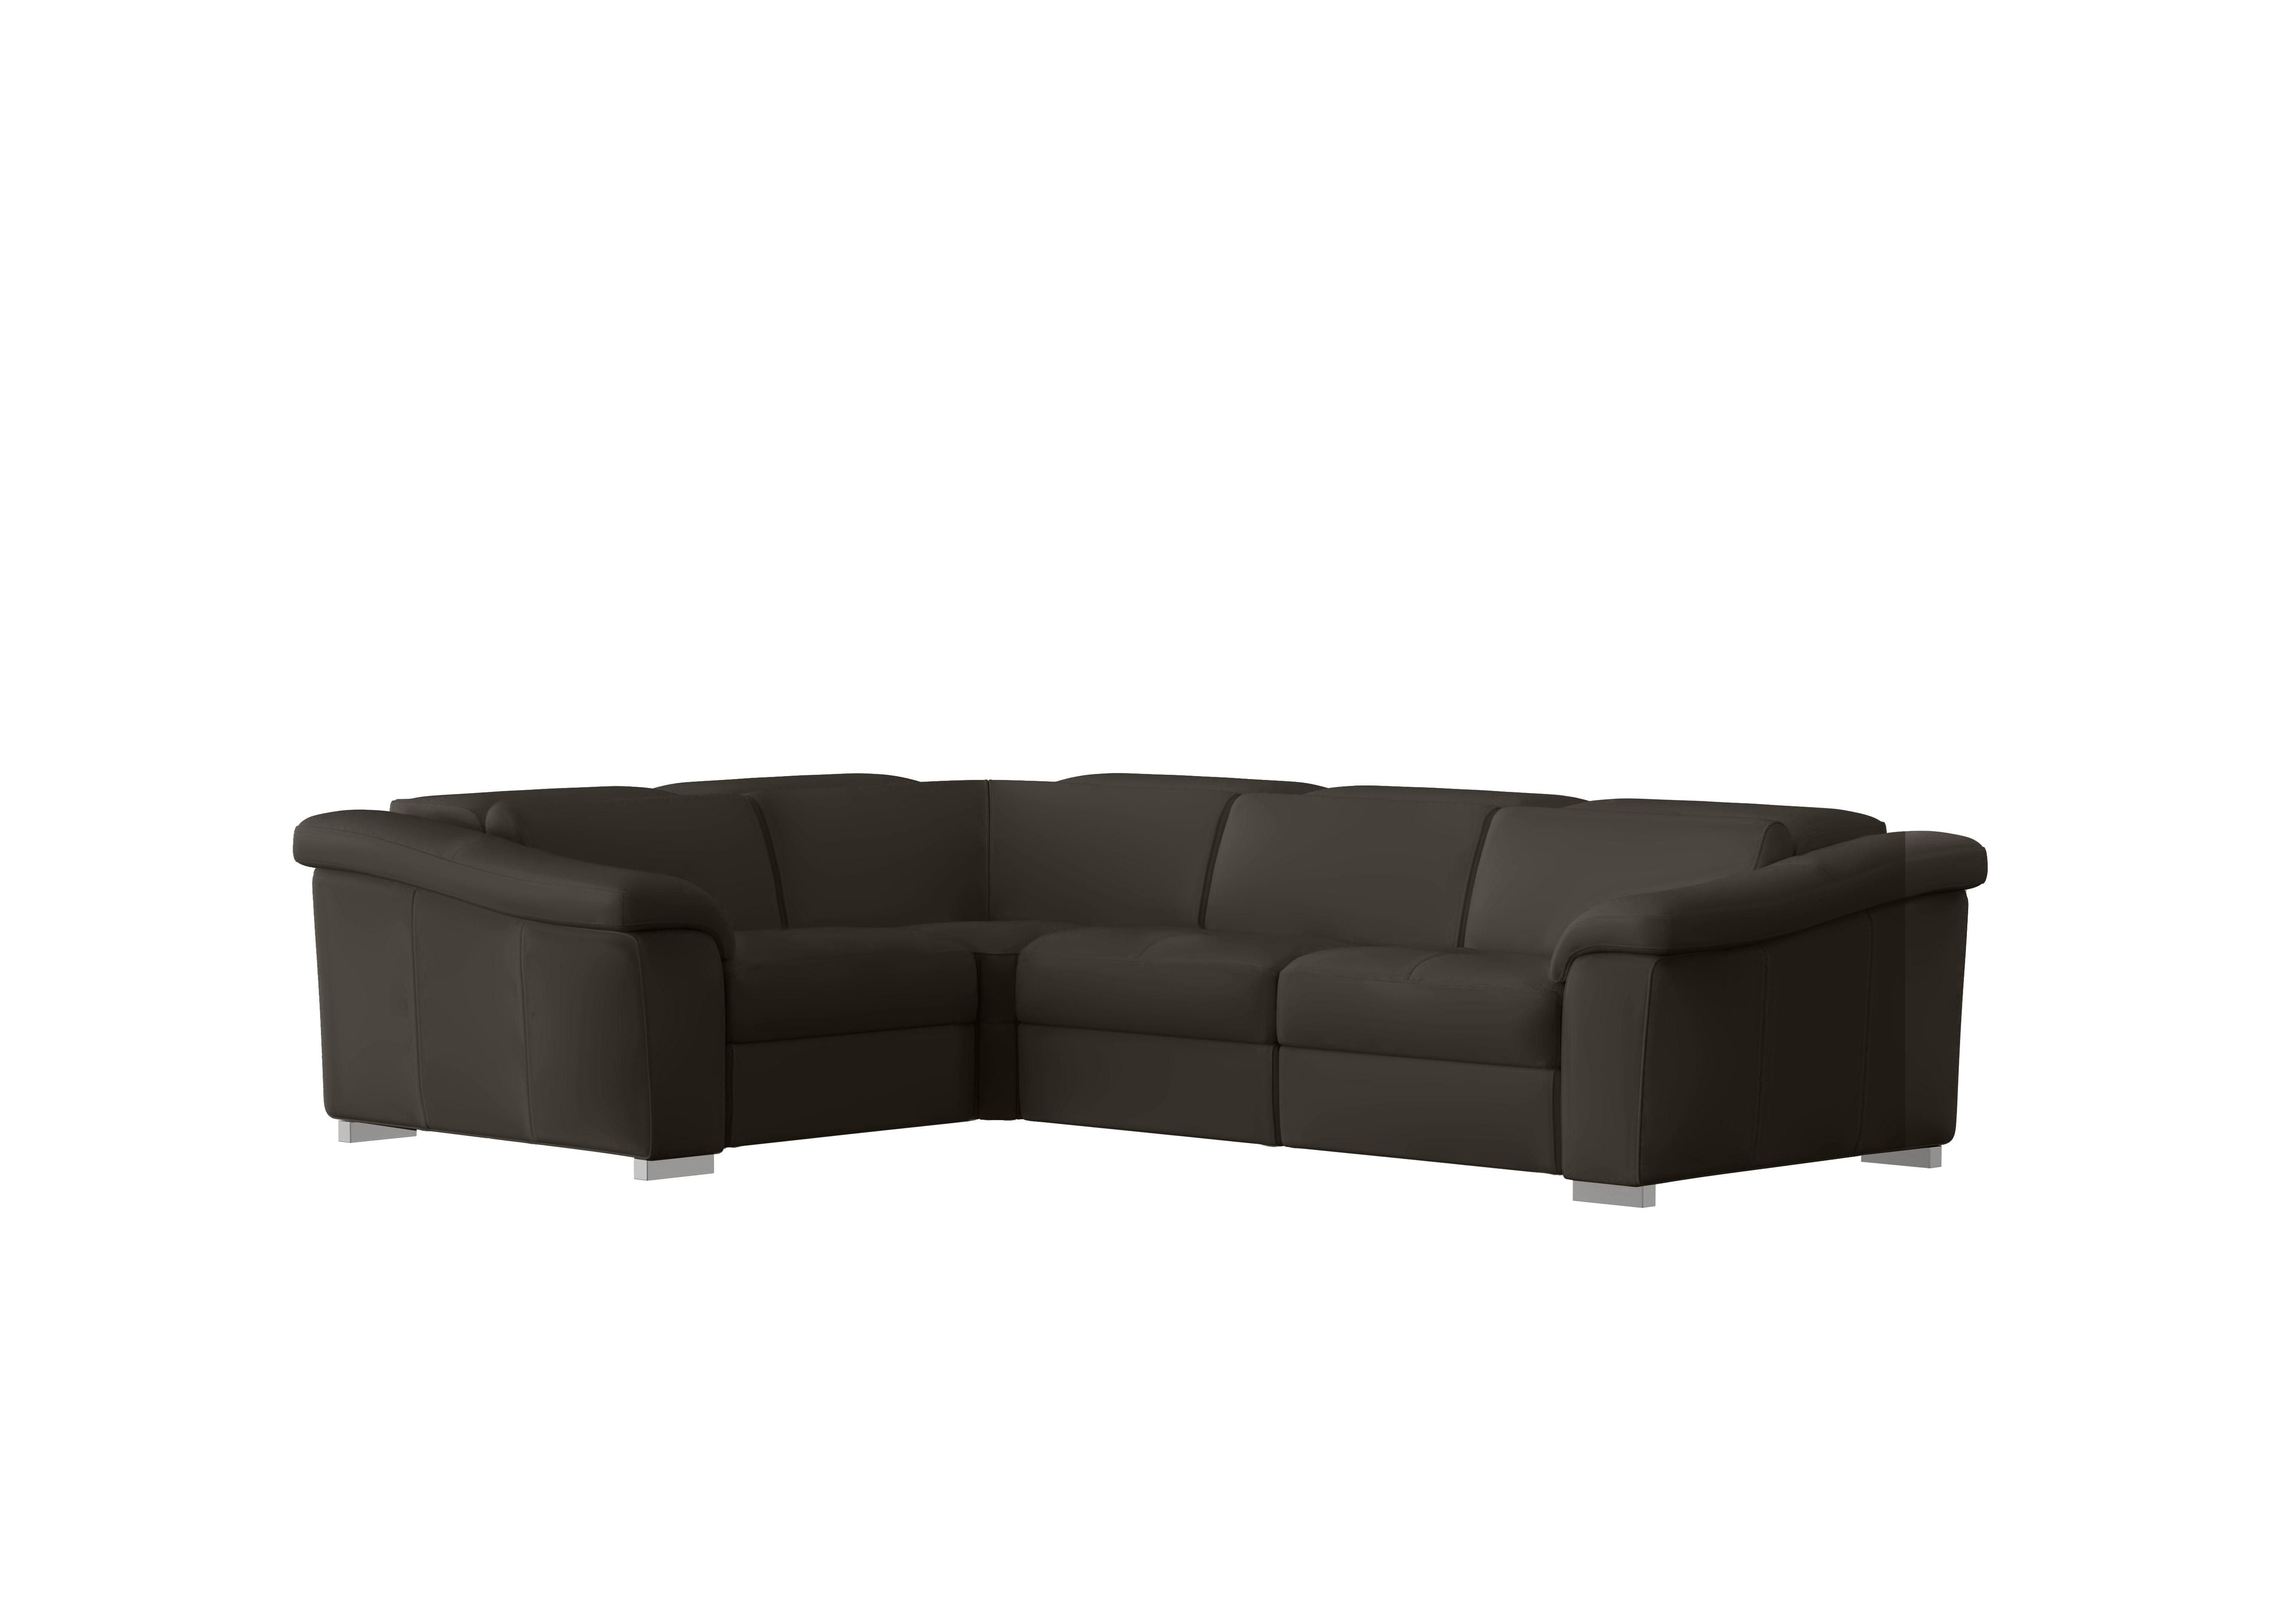 Galileo Leather Corner Sofa in Torello Chocolate 91 Ch on Furniture Village